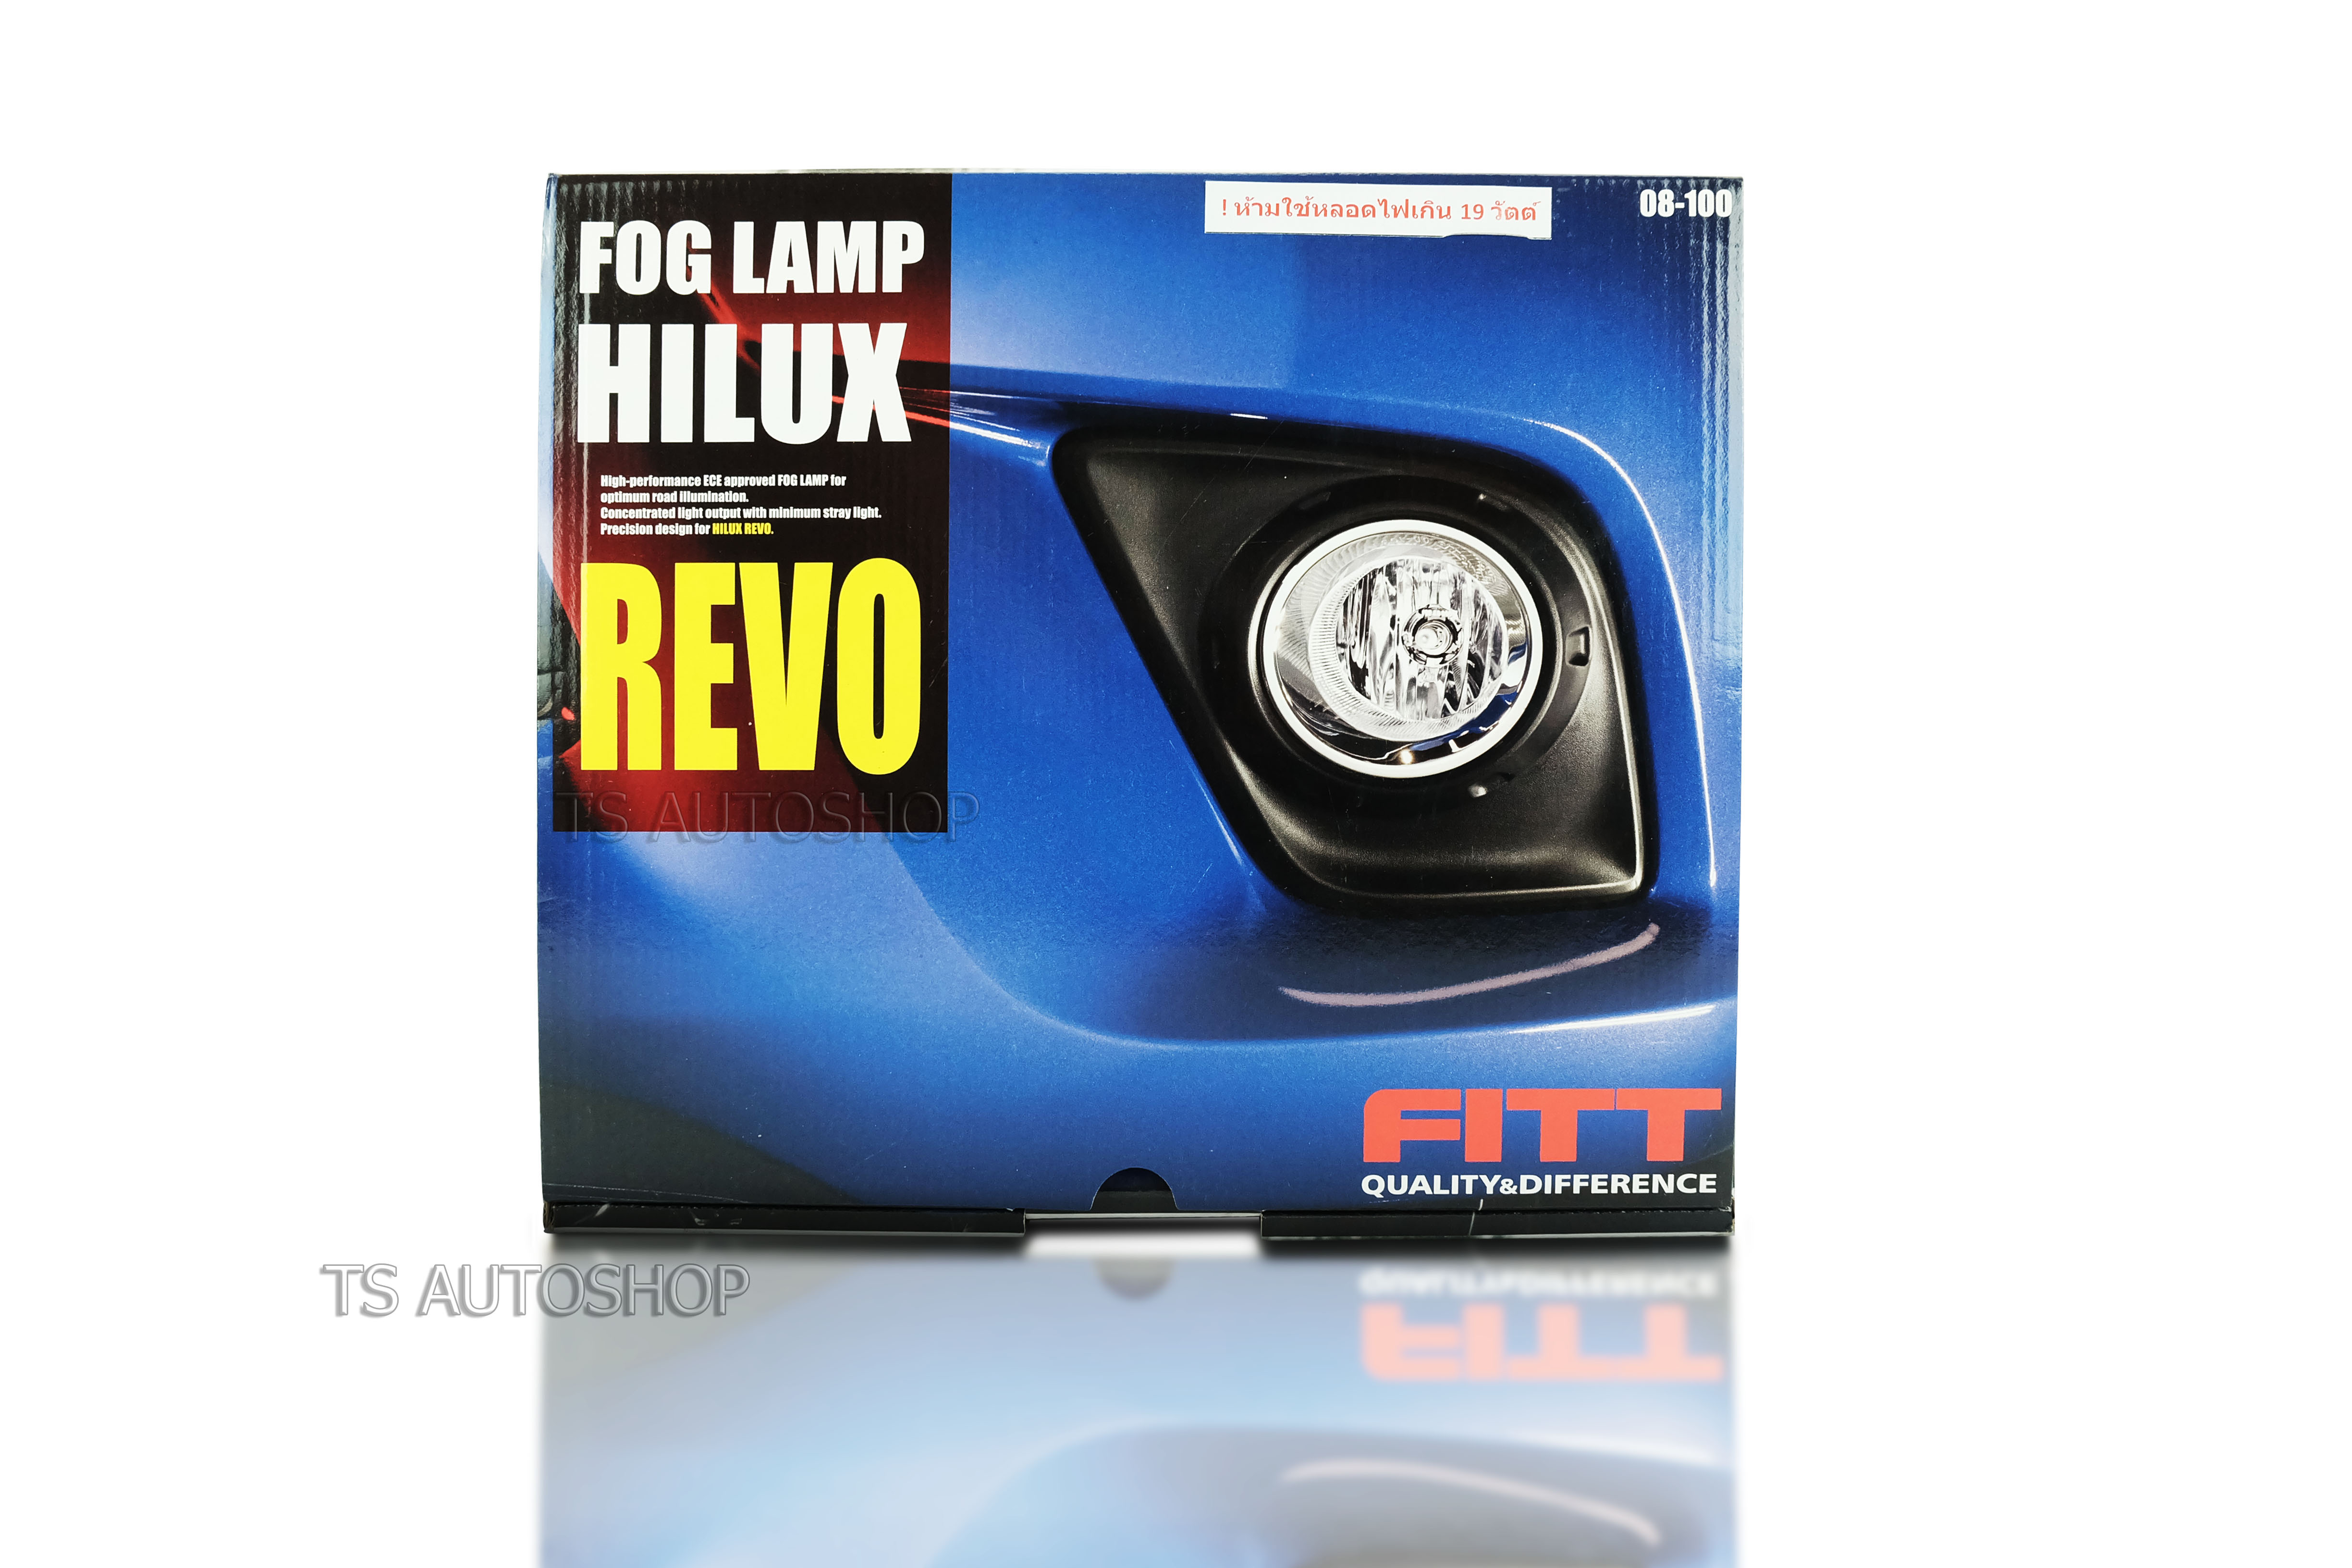 Set Kit Fog Lamp Spot Light Switch Wire Fits Toyota Hilux Revo 2dr 4dr 4x4 2015